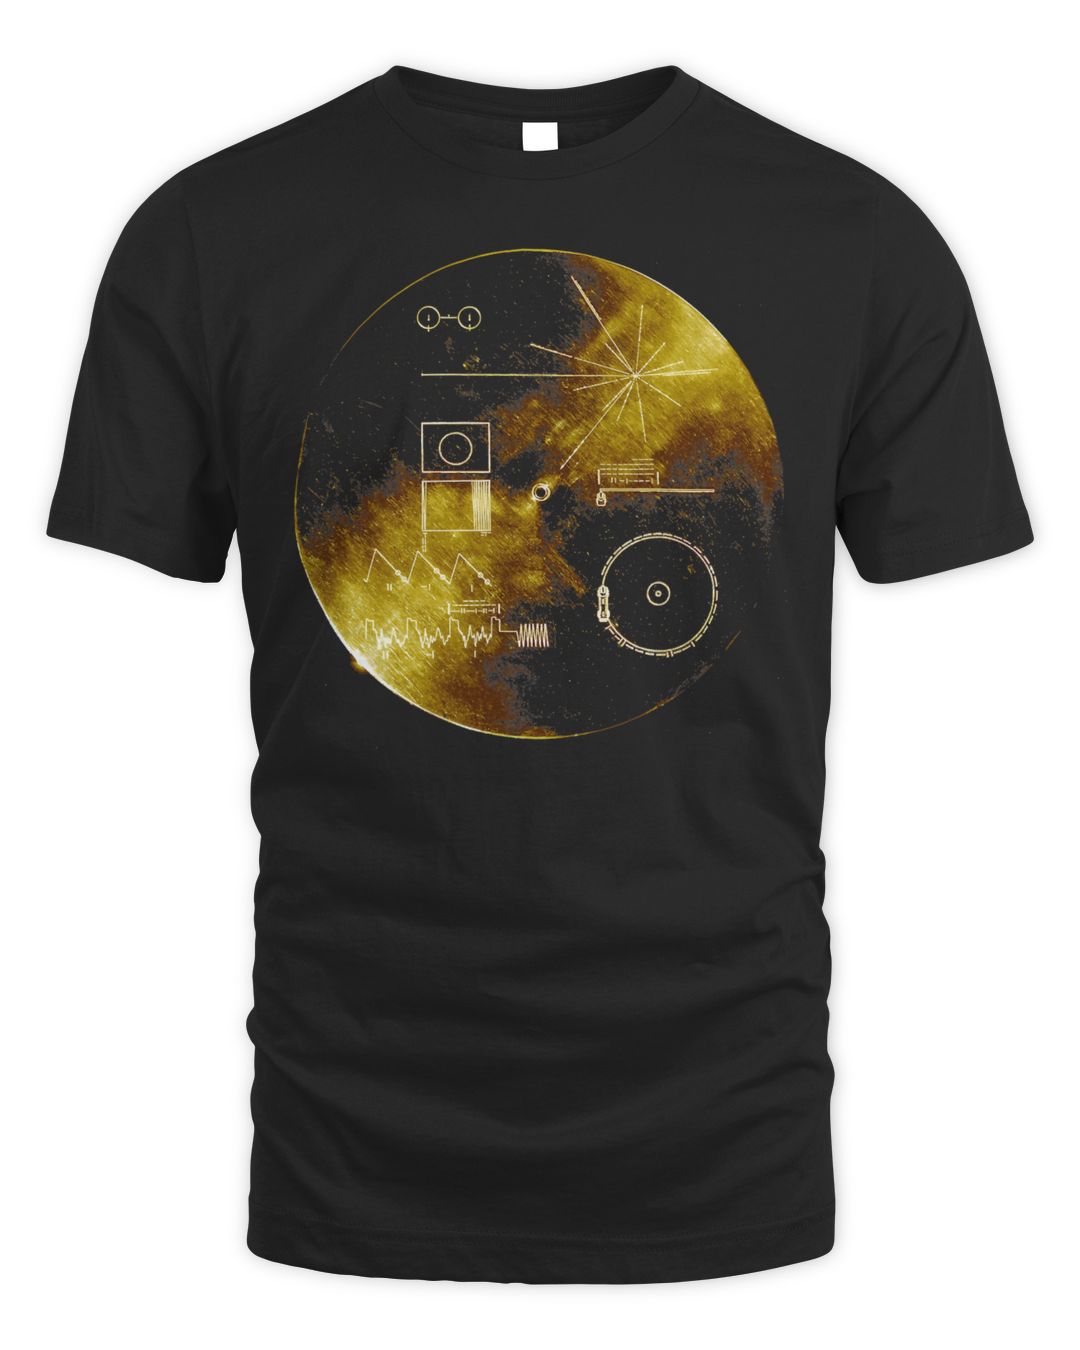 Voyager Golden Record NASA Voyager spacecraft Space T-Shirt | SenPrints